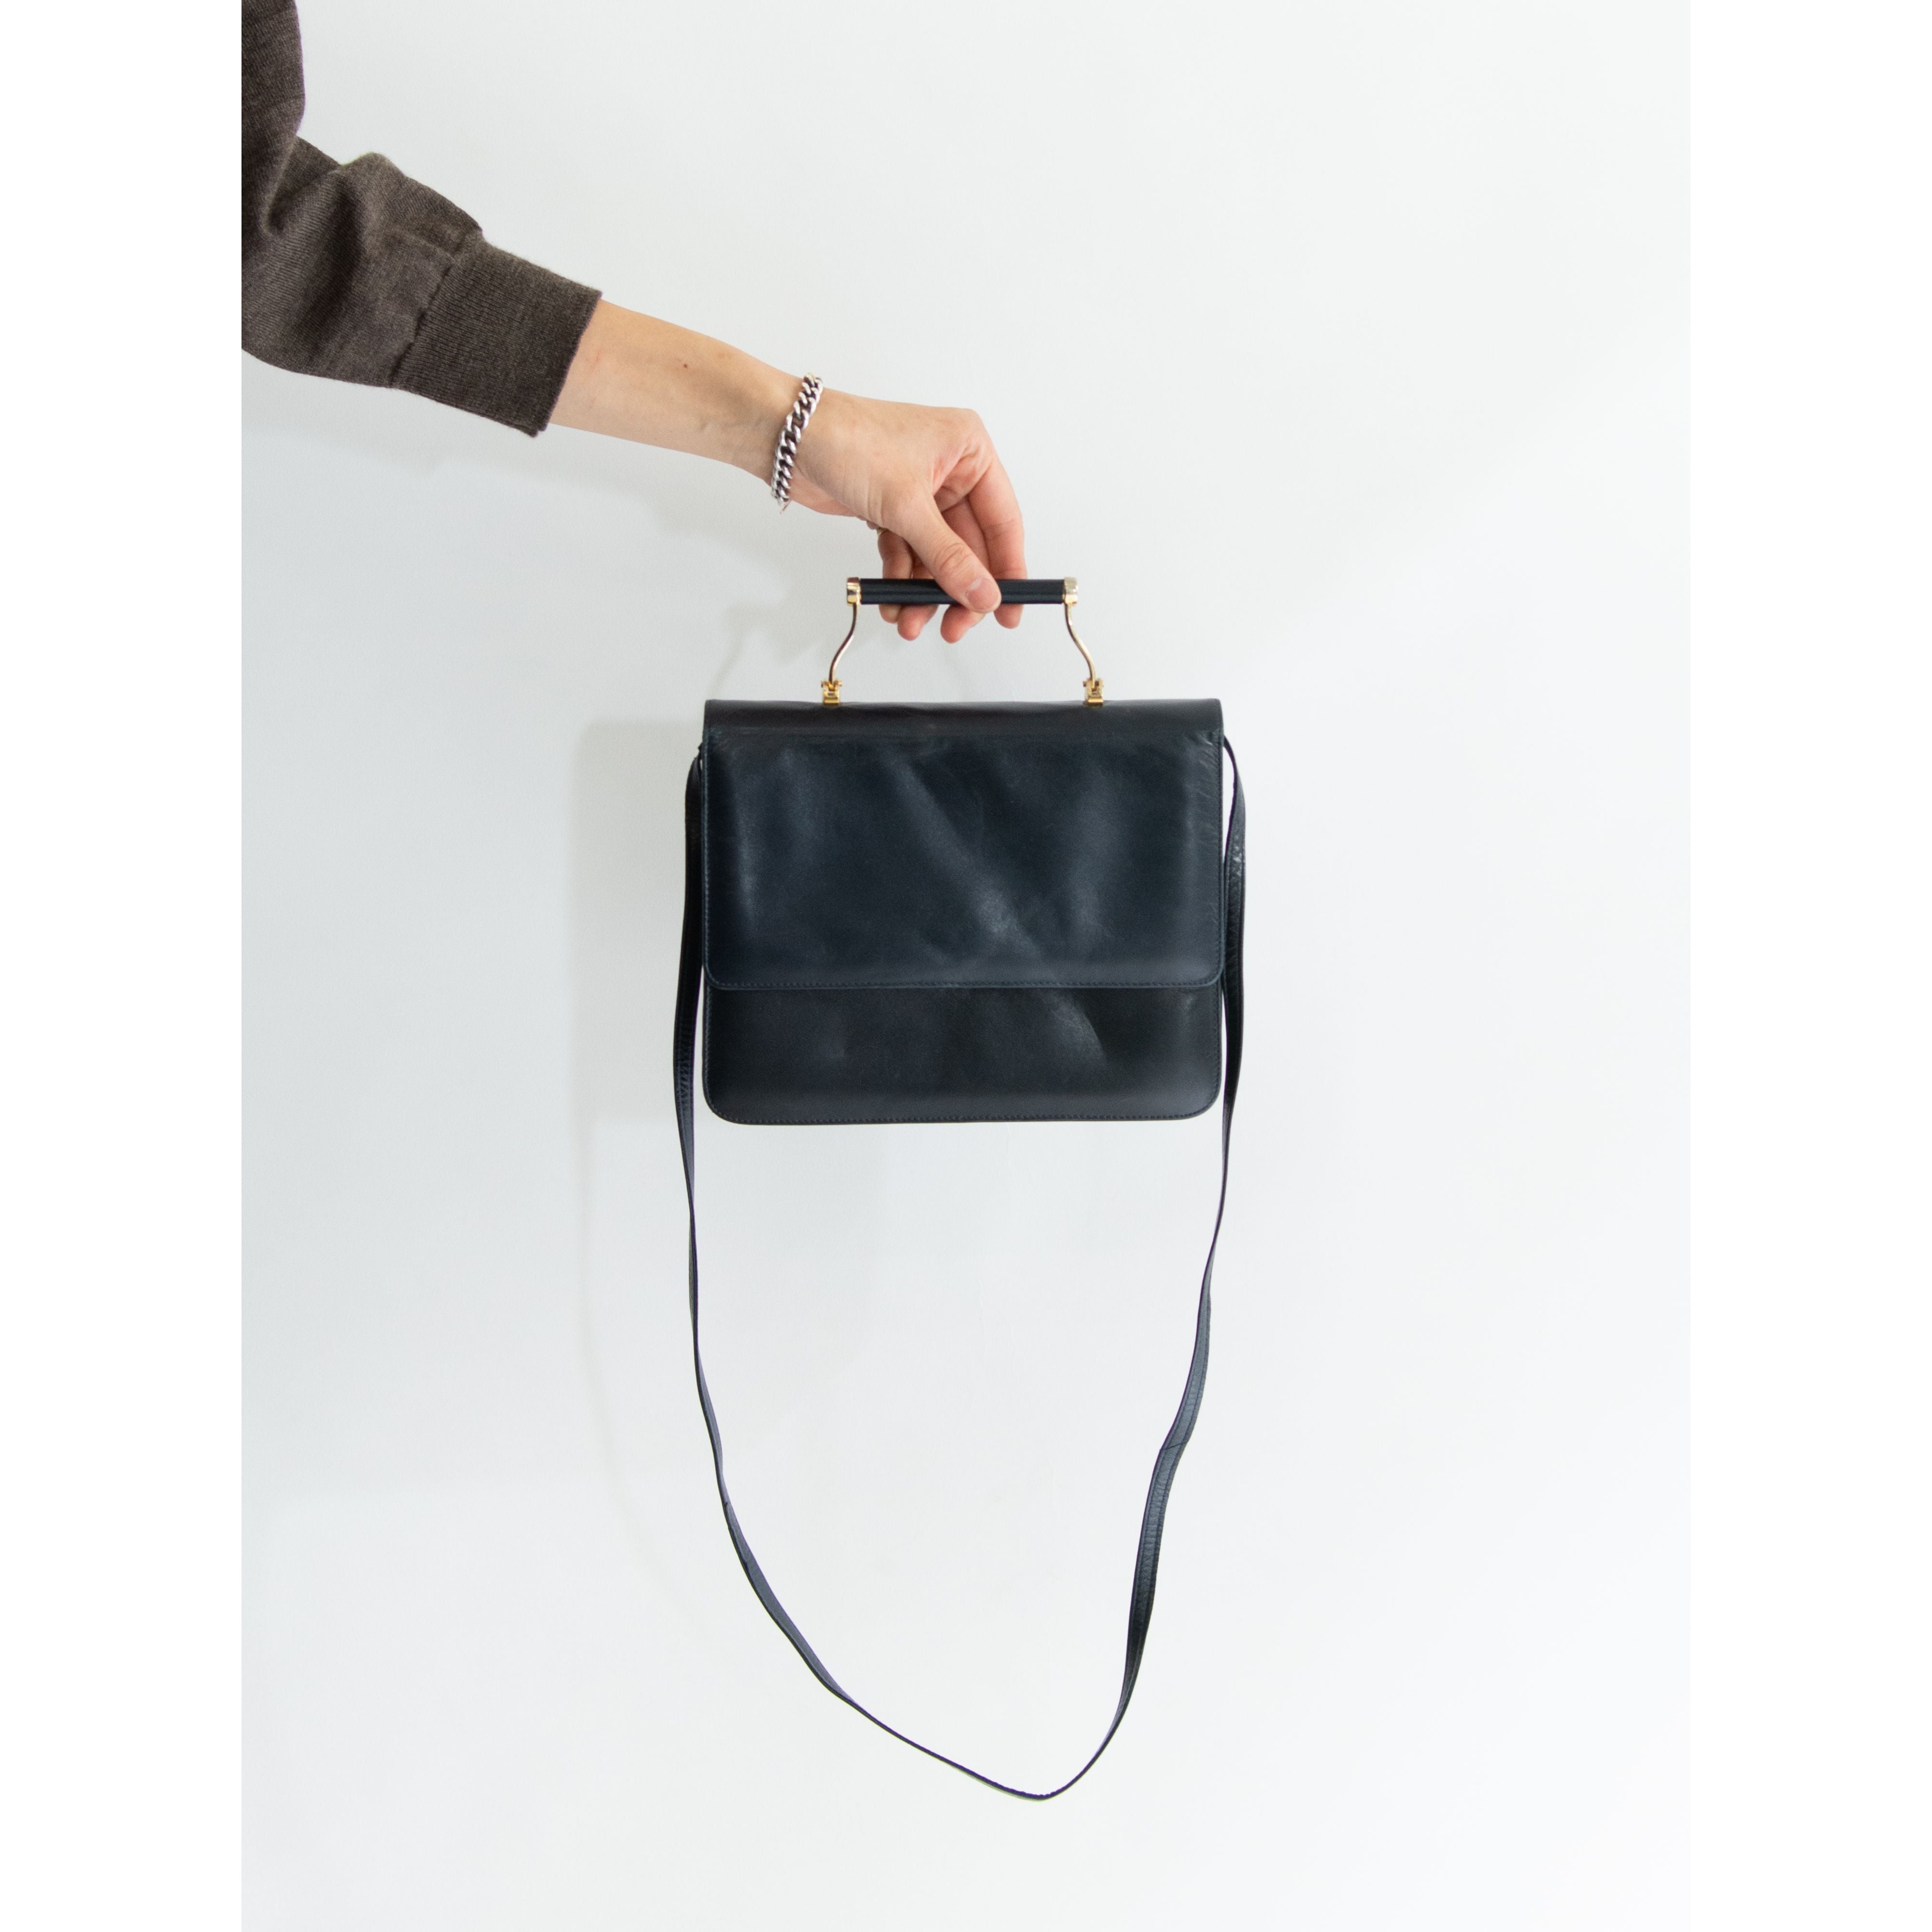 CHARLES JOURDAN】Made in France 2way leather crossbody bag